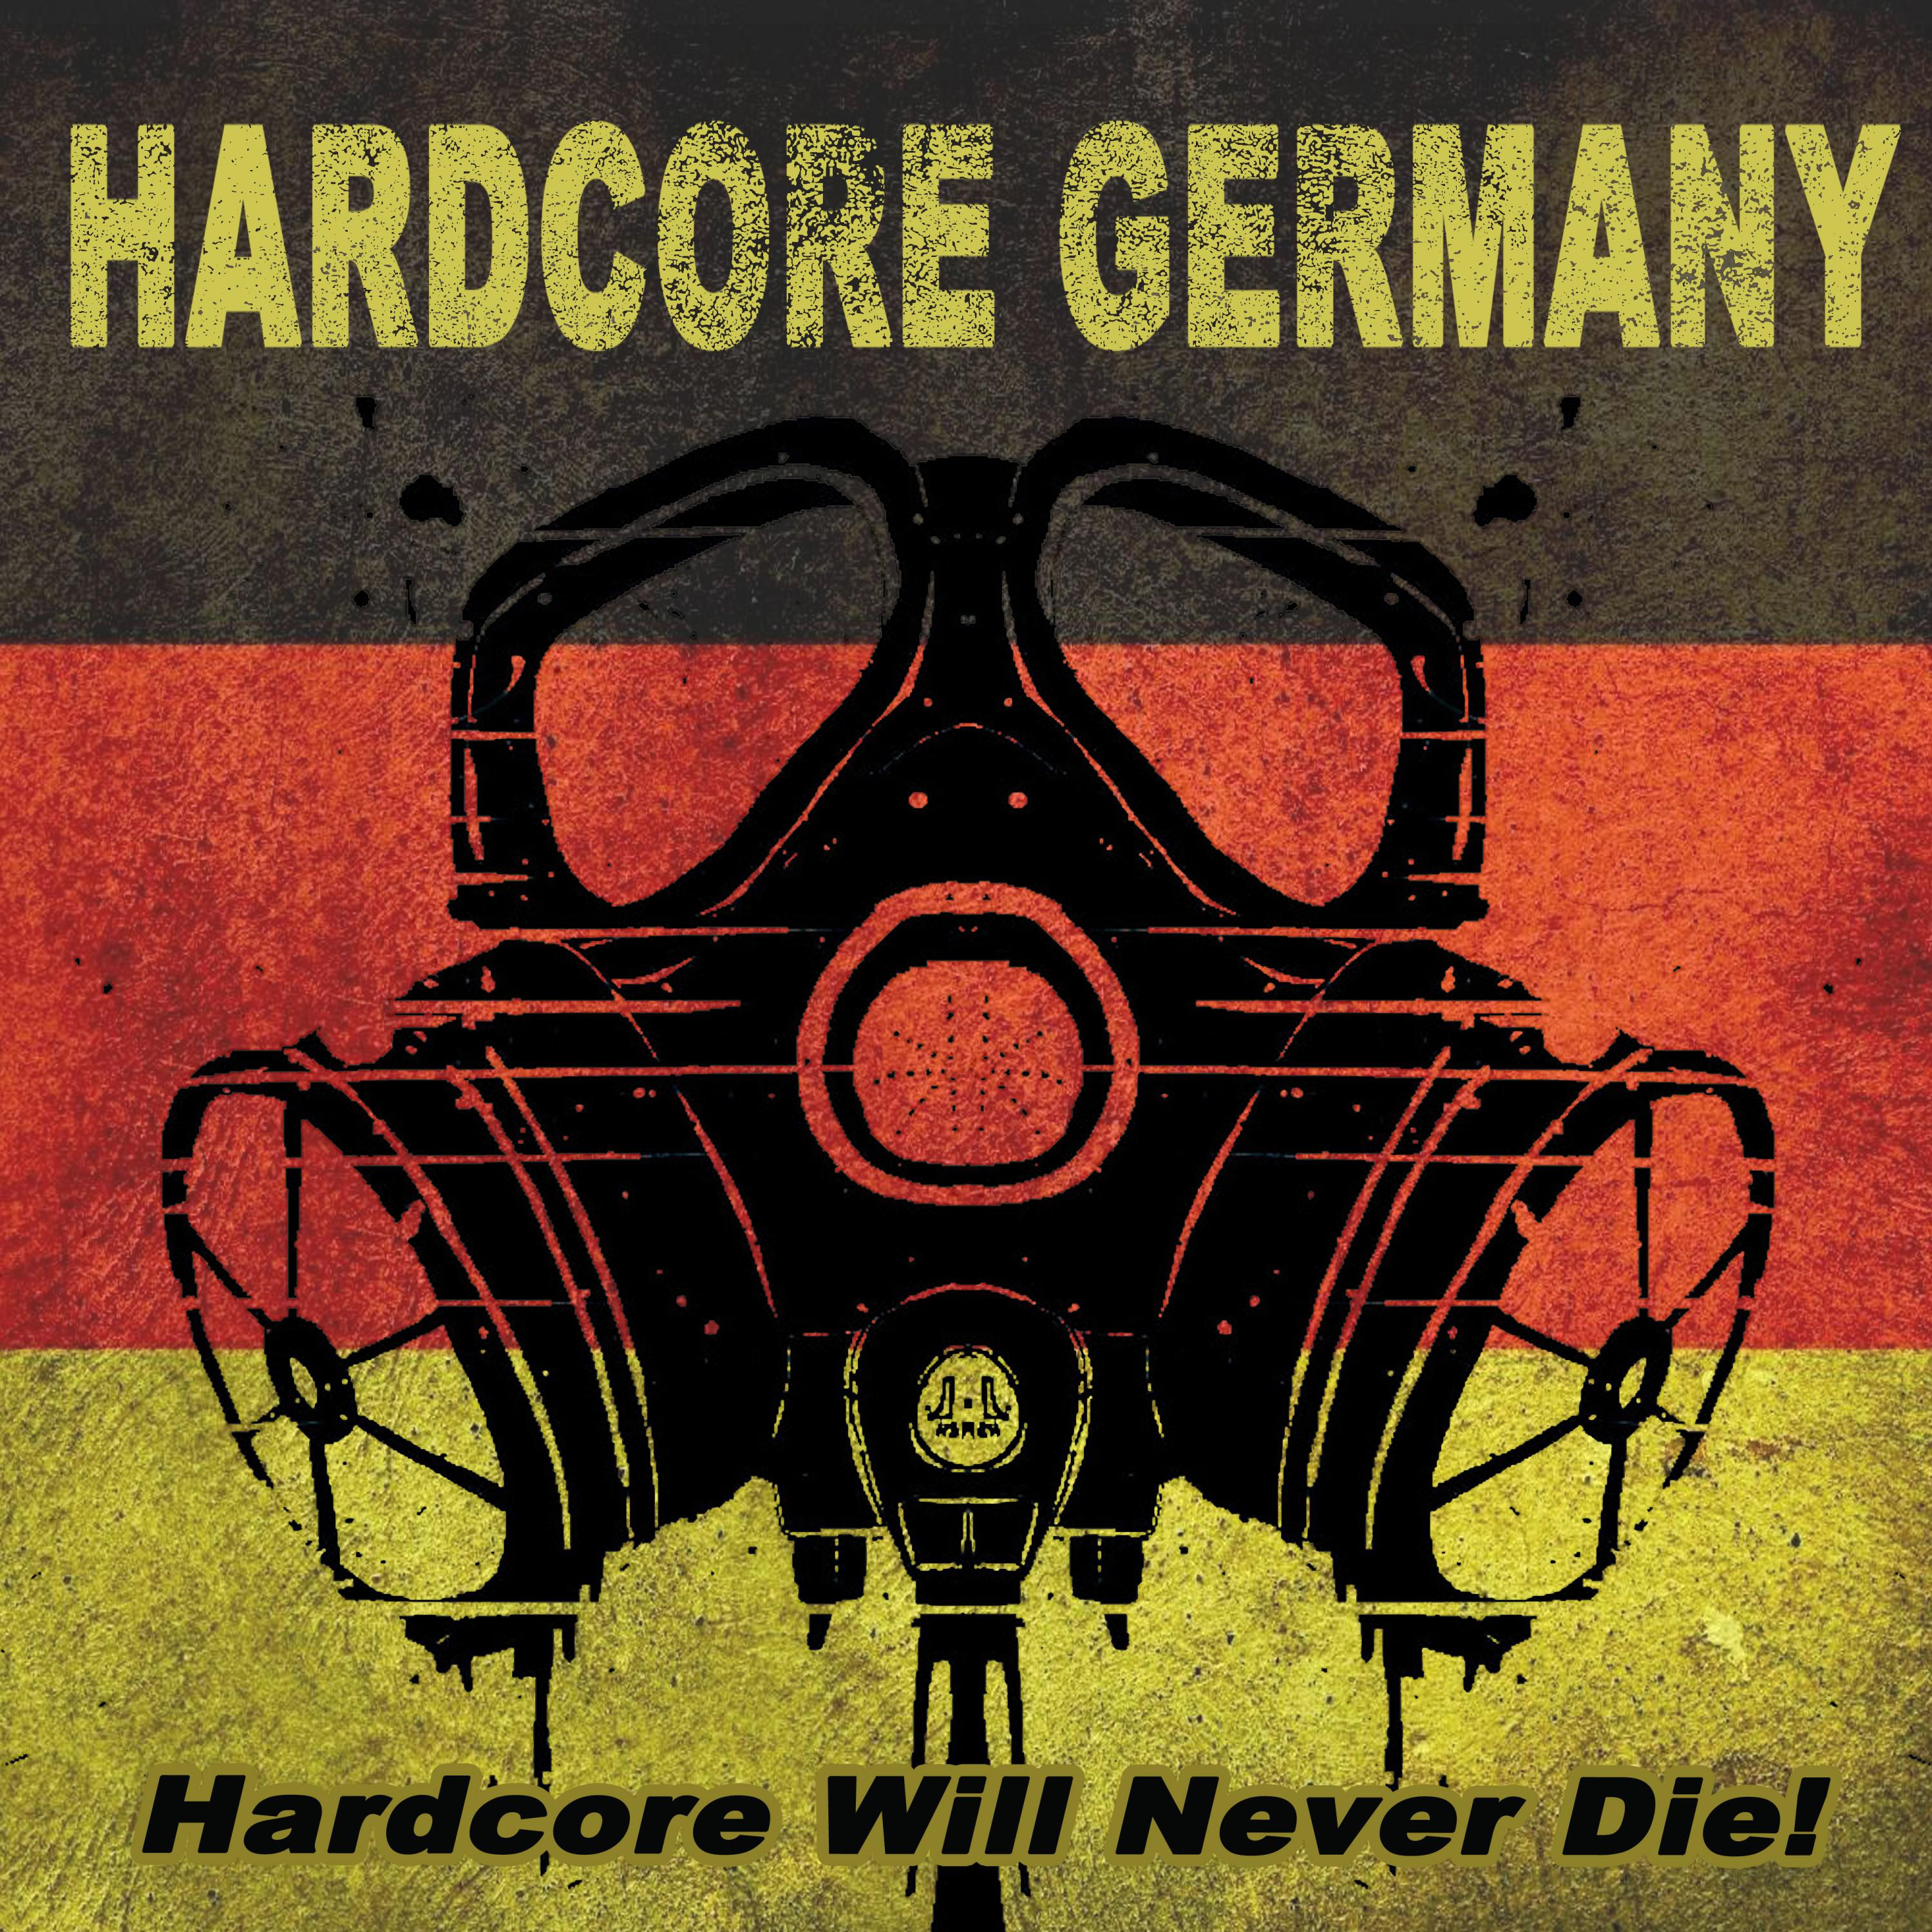 Hardcore german